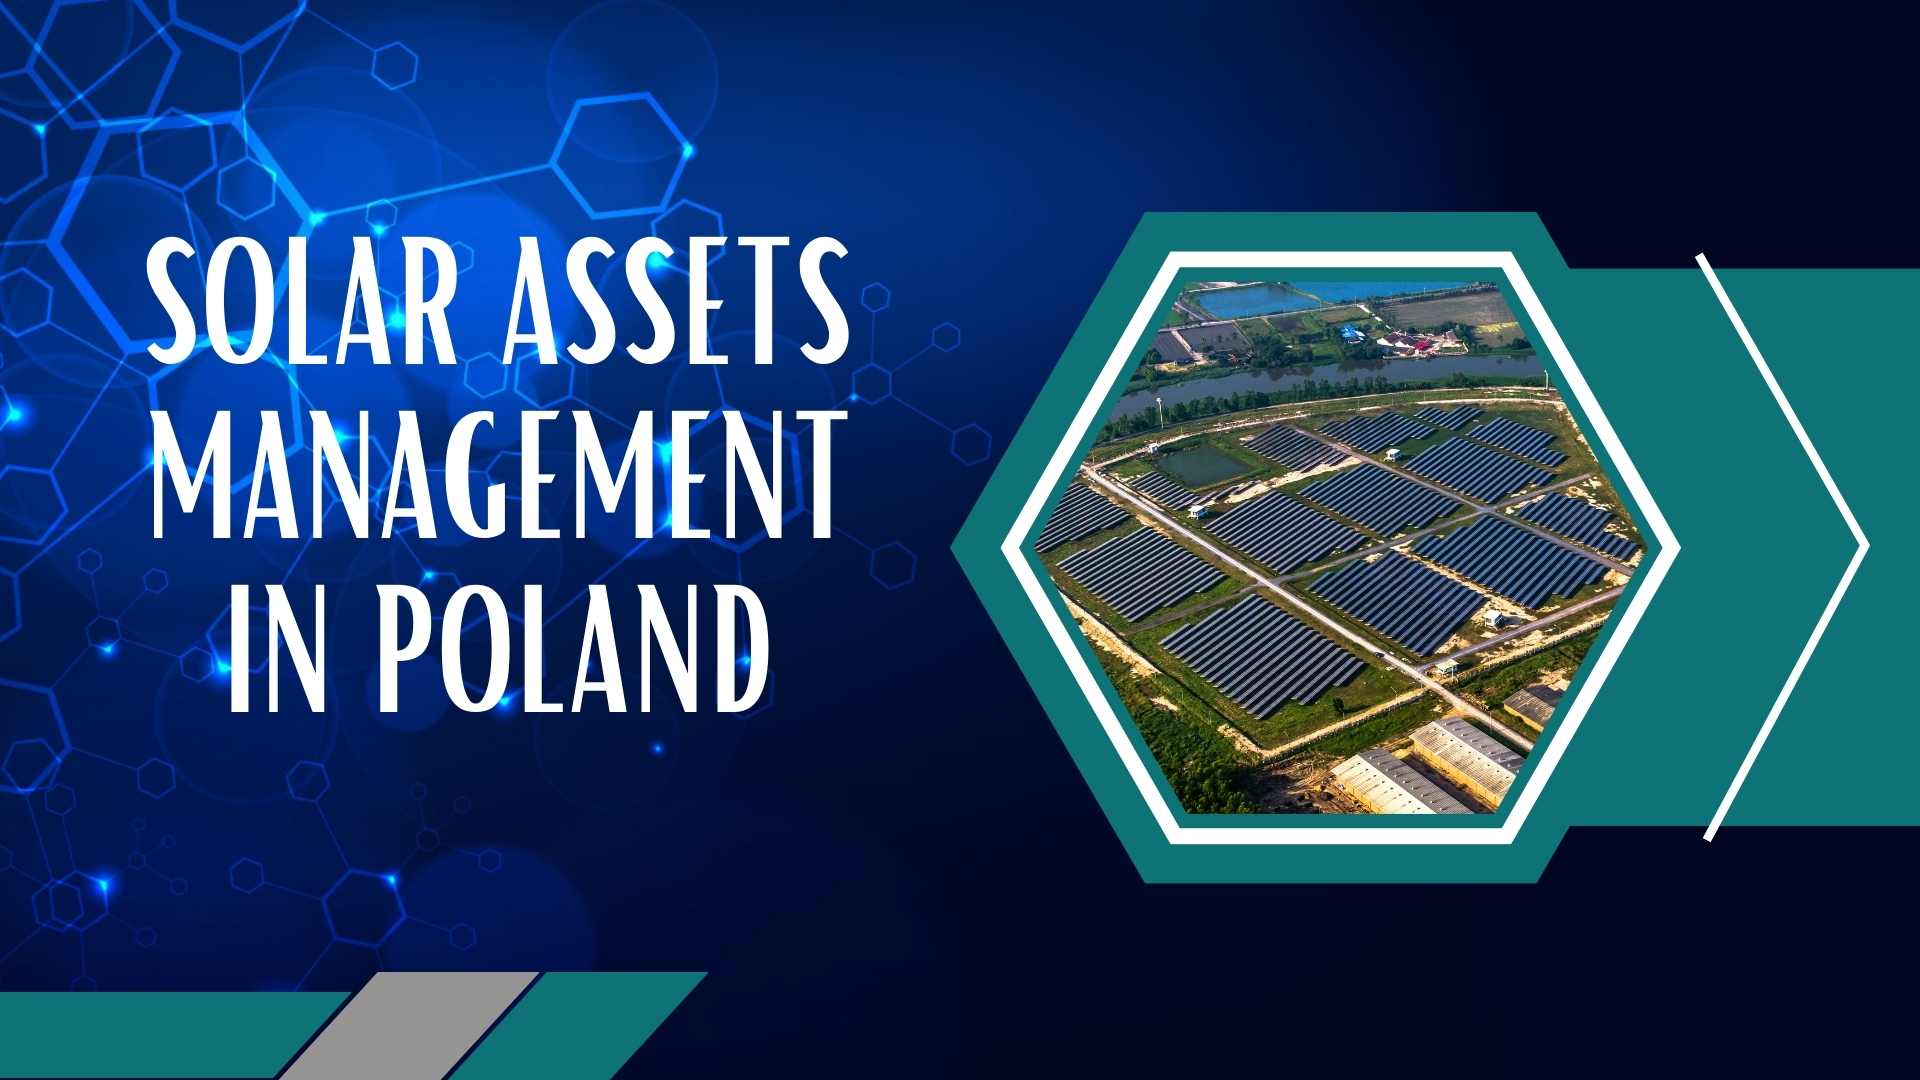 Solar assets management in Poland